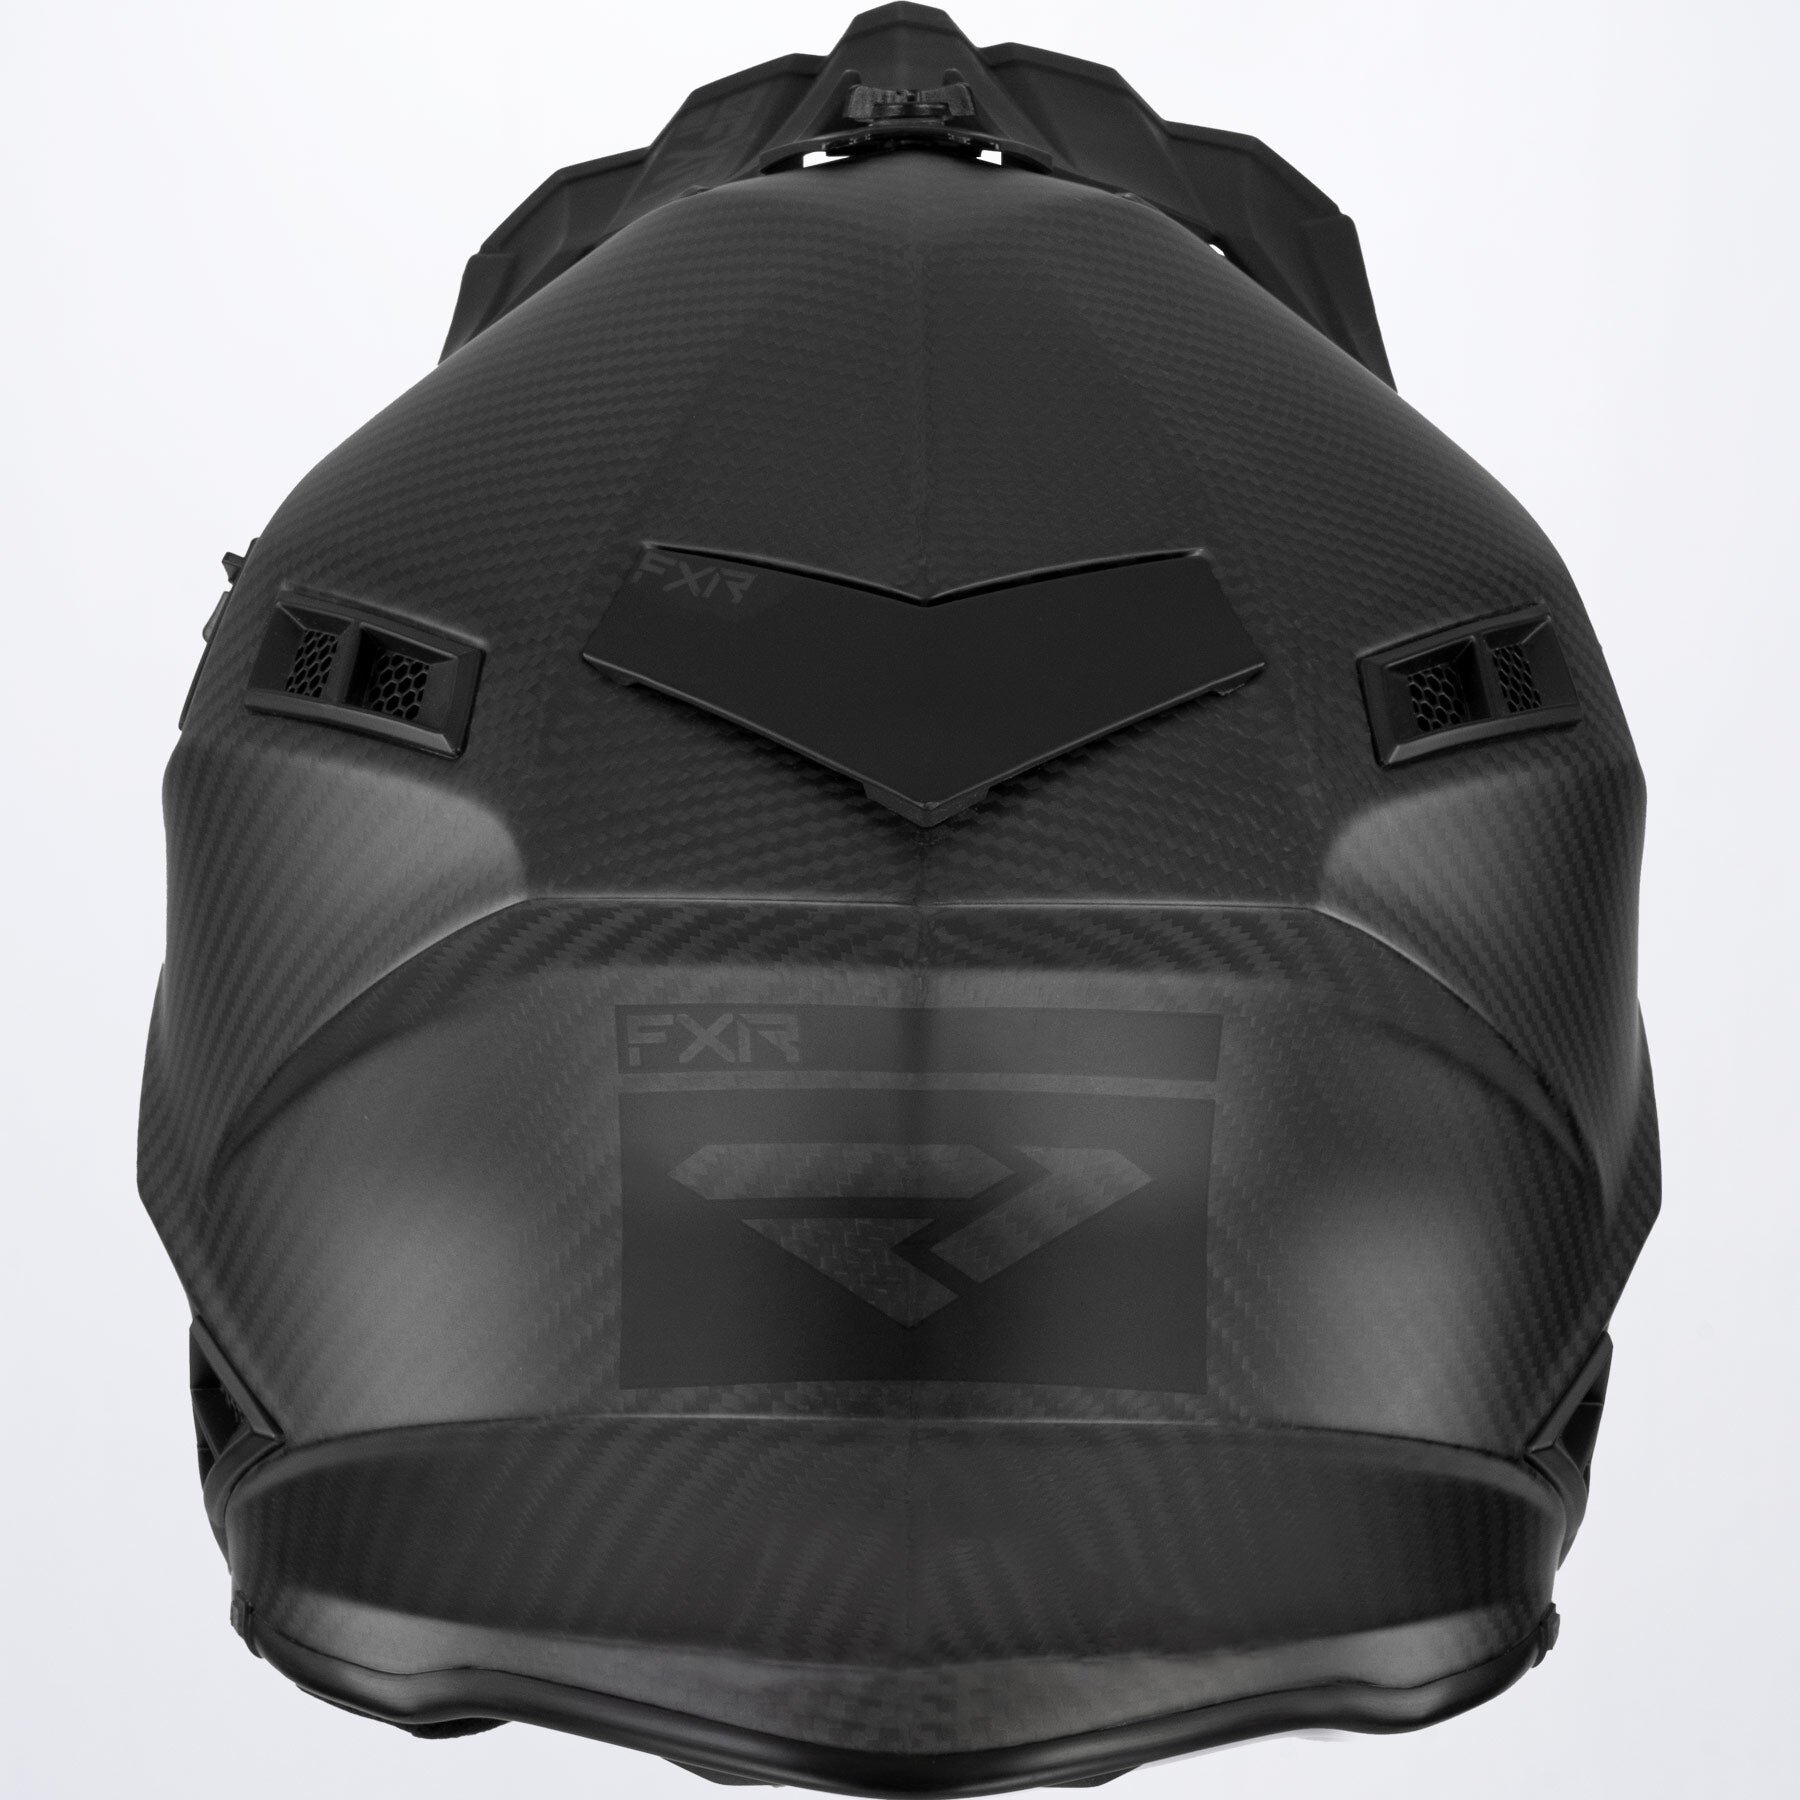 Helium Carbon Helmet with Auto Buckle